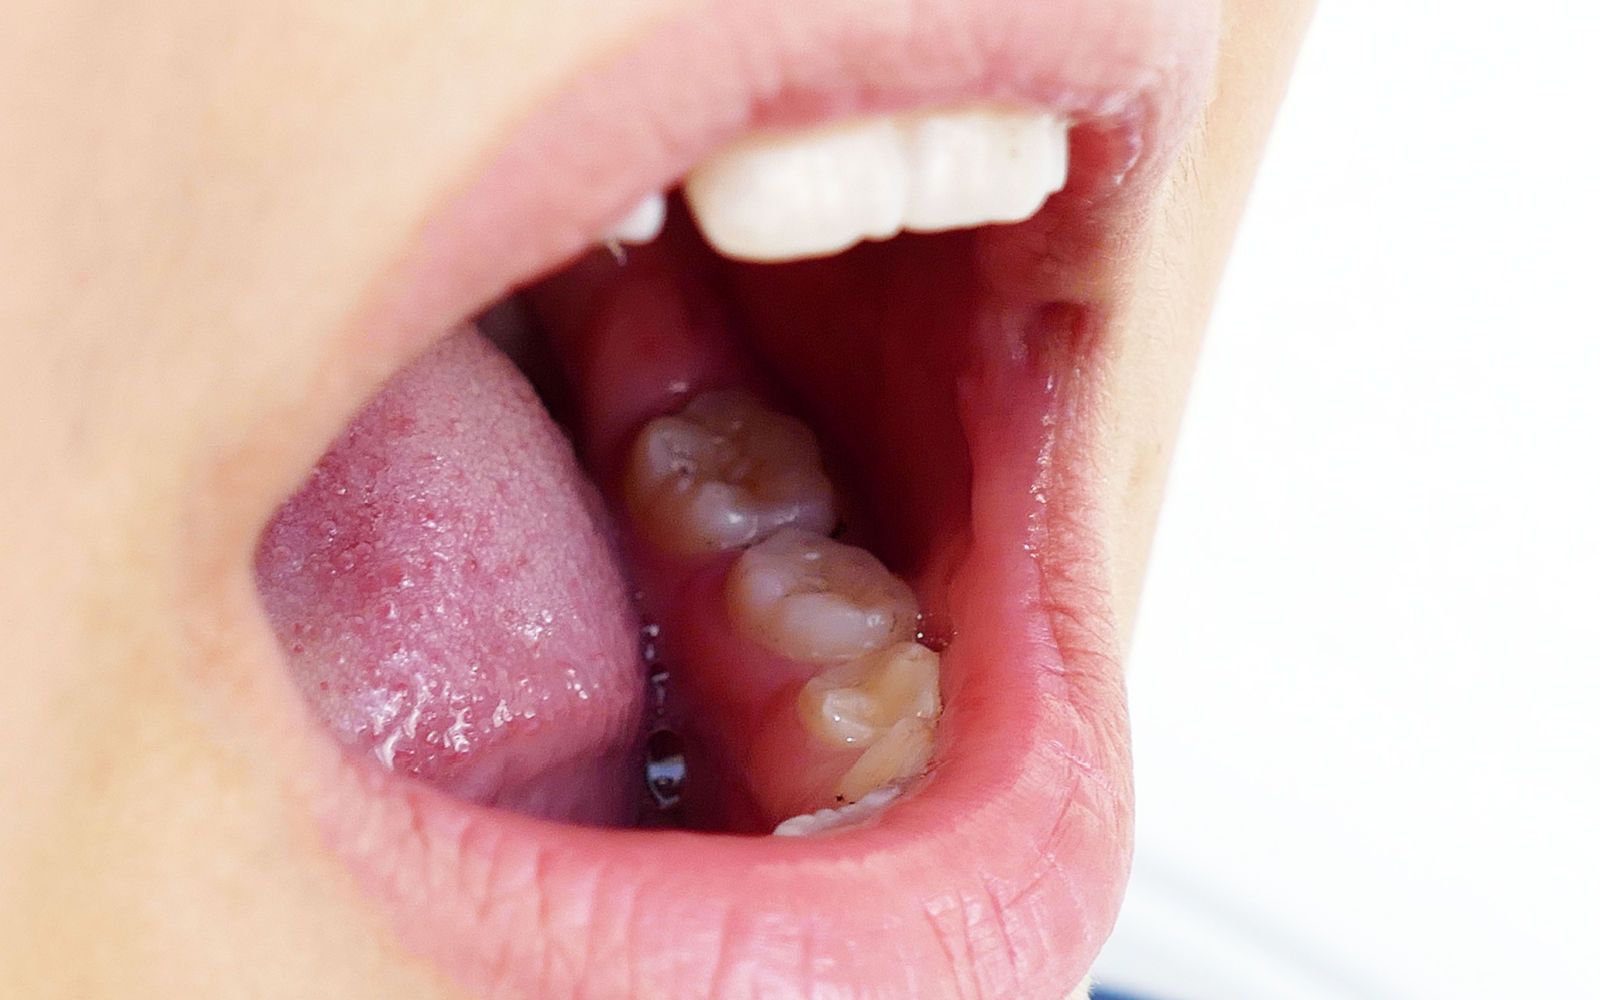 Why Do I Have a Hard Bony Lump on My Gum? - Tulsa Precision Dental